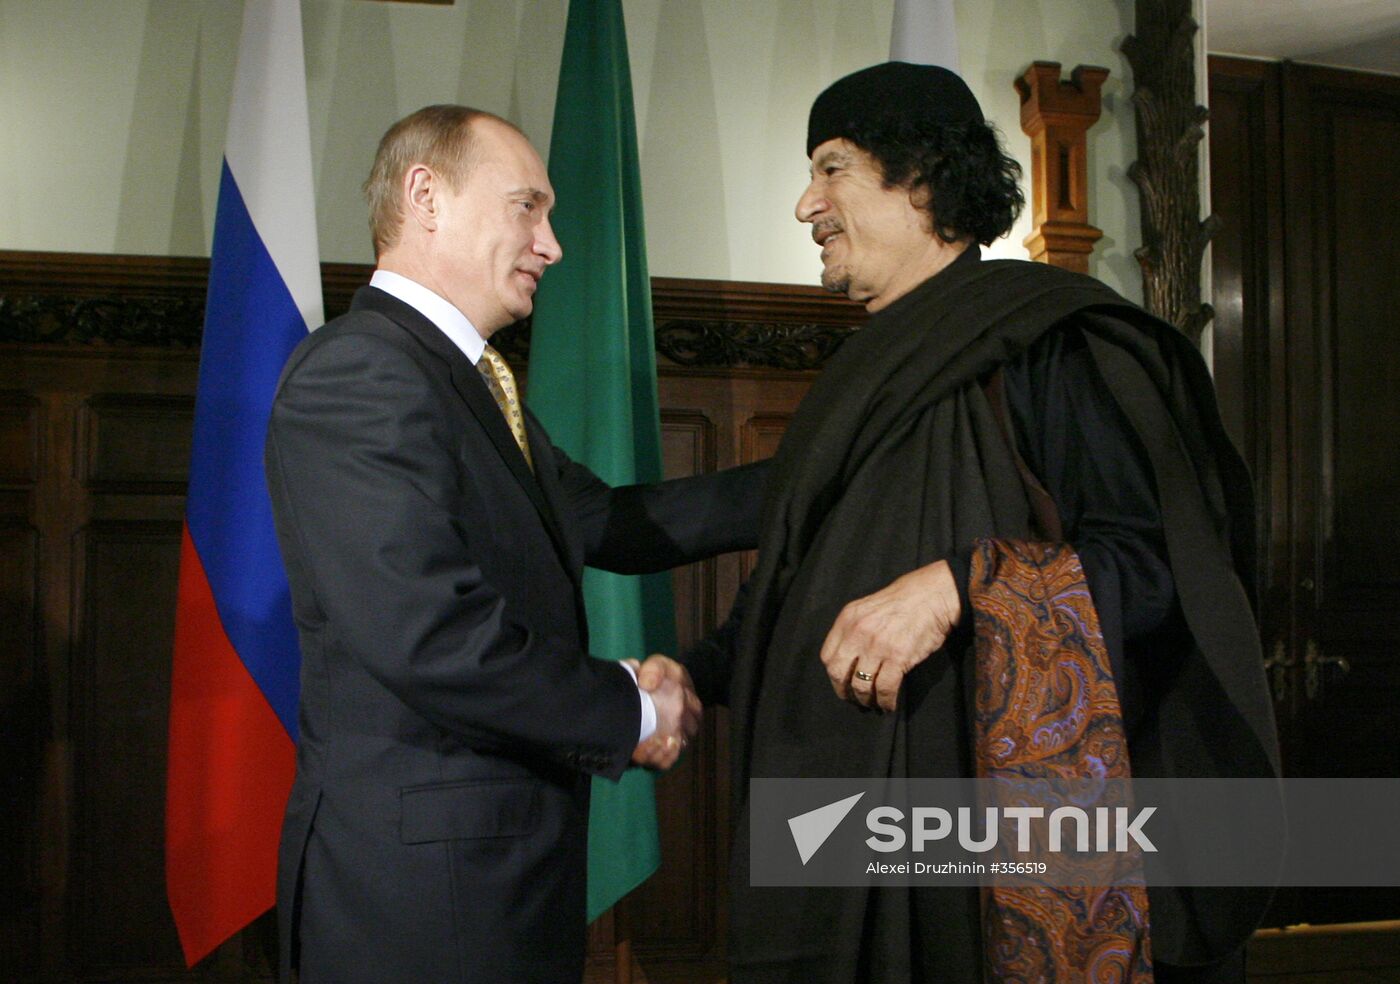 Vladimir Putin meets Muammar Gaddafi